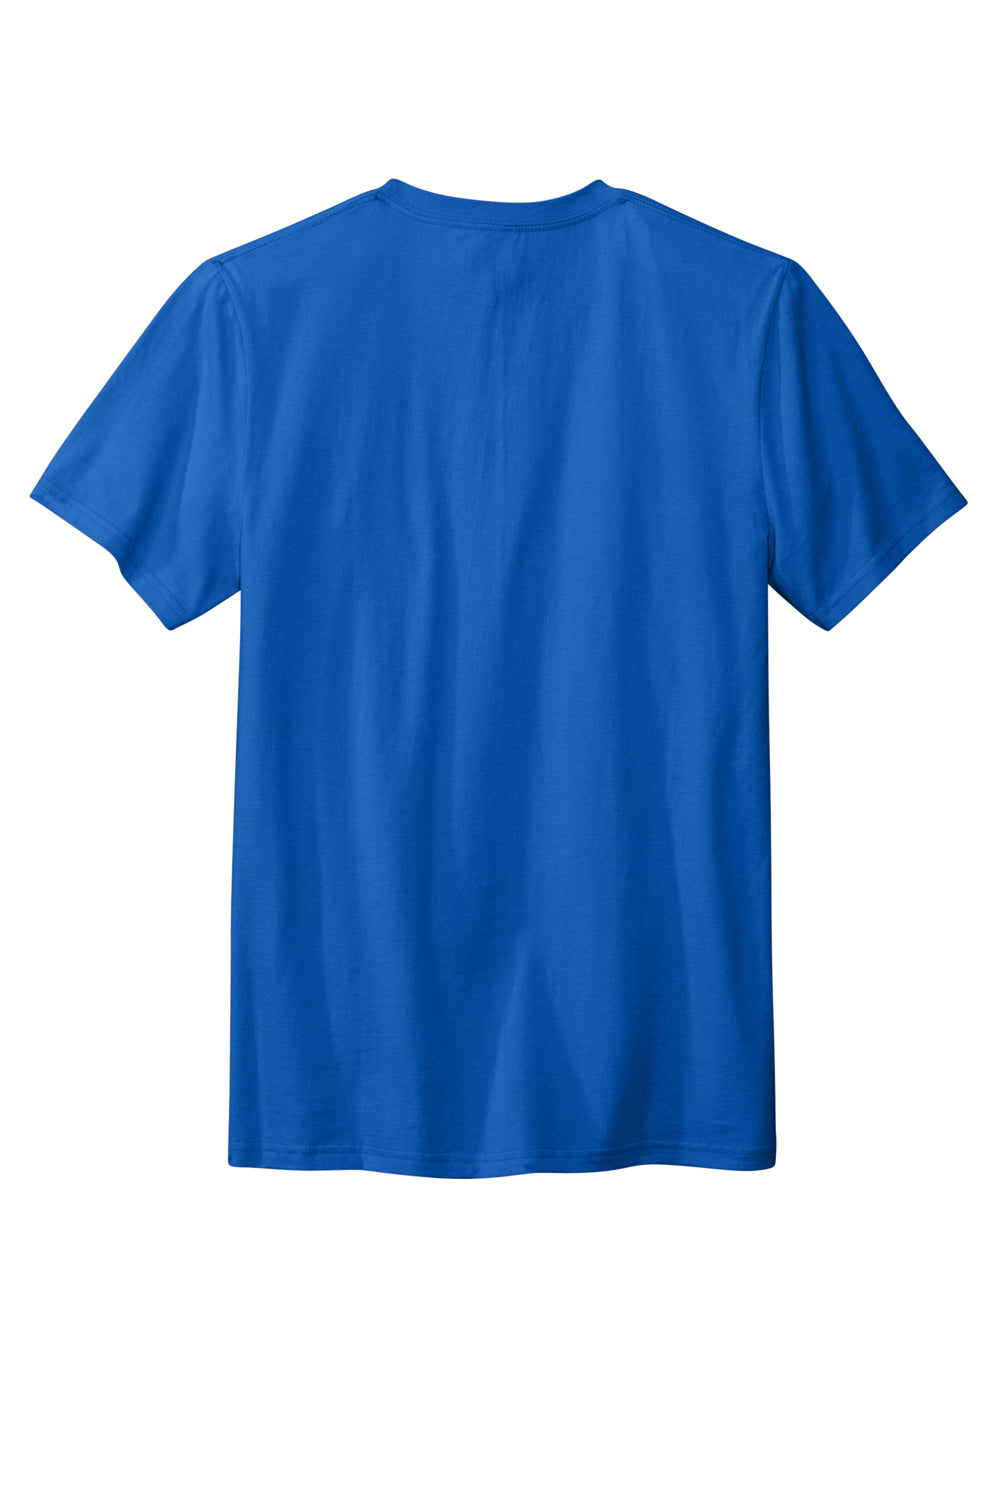 Volunteer Knitwear VL45 Daily Short Sleeve Crewneck T-Shirt True Royal Blue Flat Back